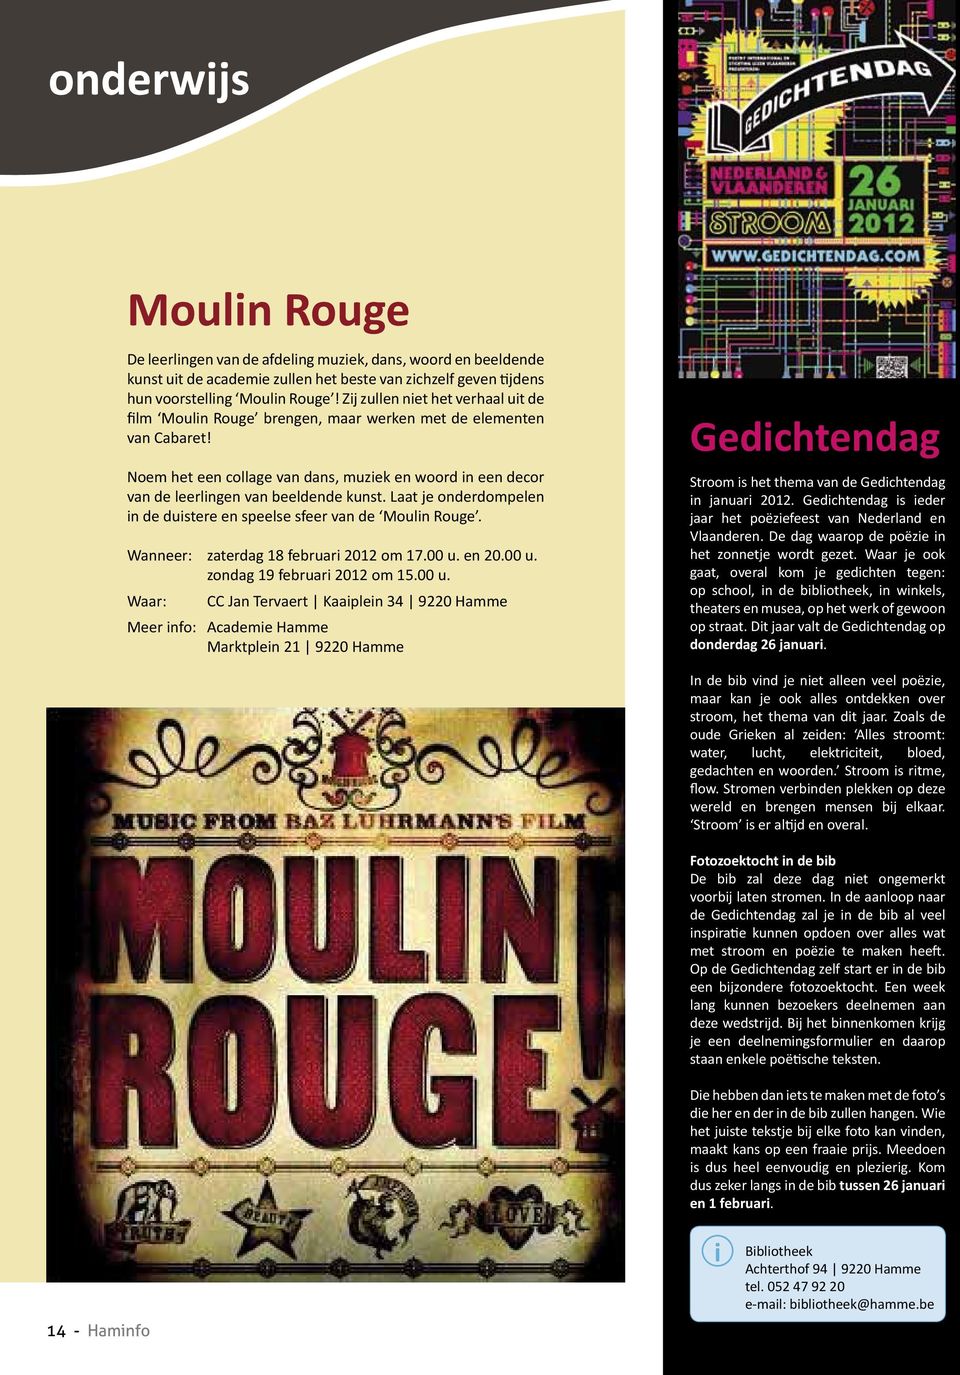 Laat je onderdompelen n de dustere en speelse sfeer van de Mouln Rouge. Wanneer: zaterdag 18 februar 2012 om 17.00 u.